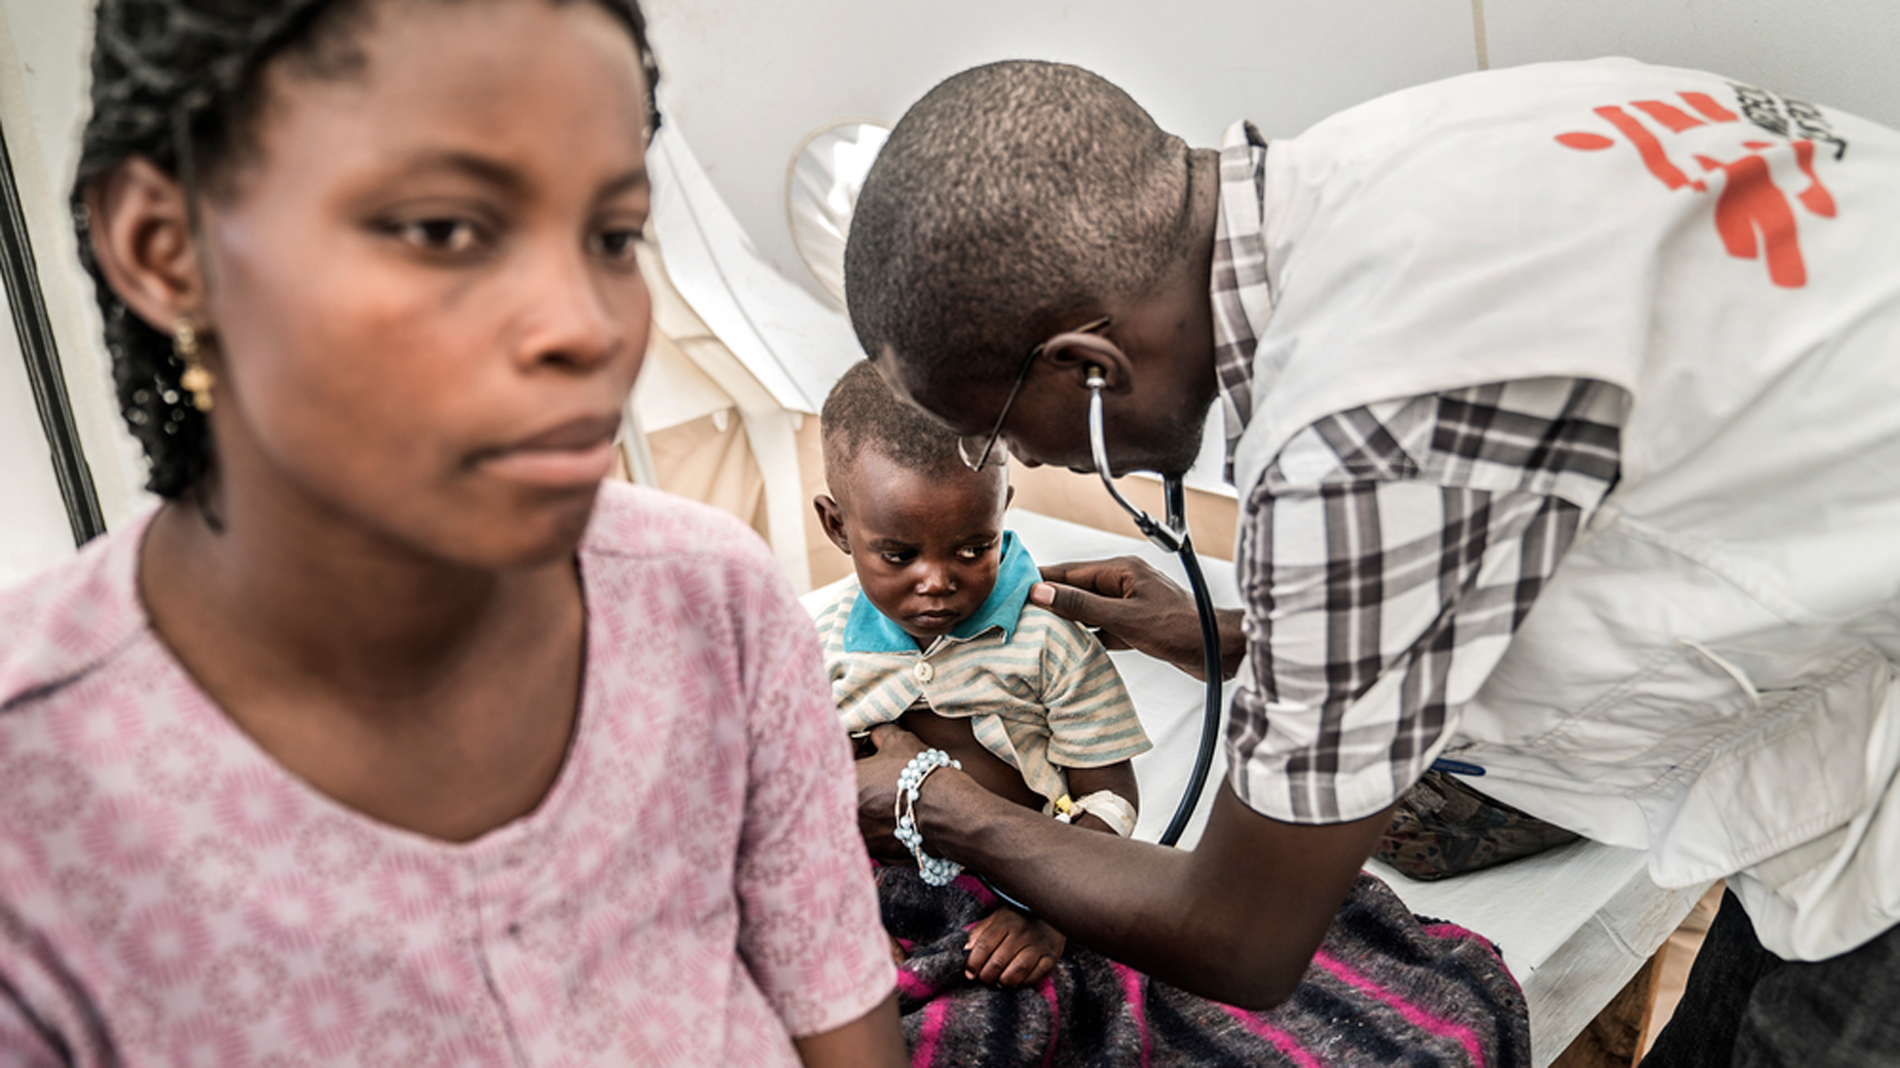 Ir al Video Innocent Kunyuwana: así vive un doctor en R.D. Congo | Vídeo: Marta Soszynska / MSF